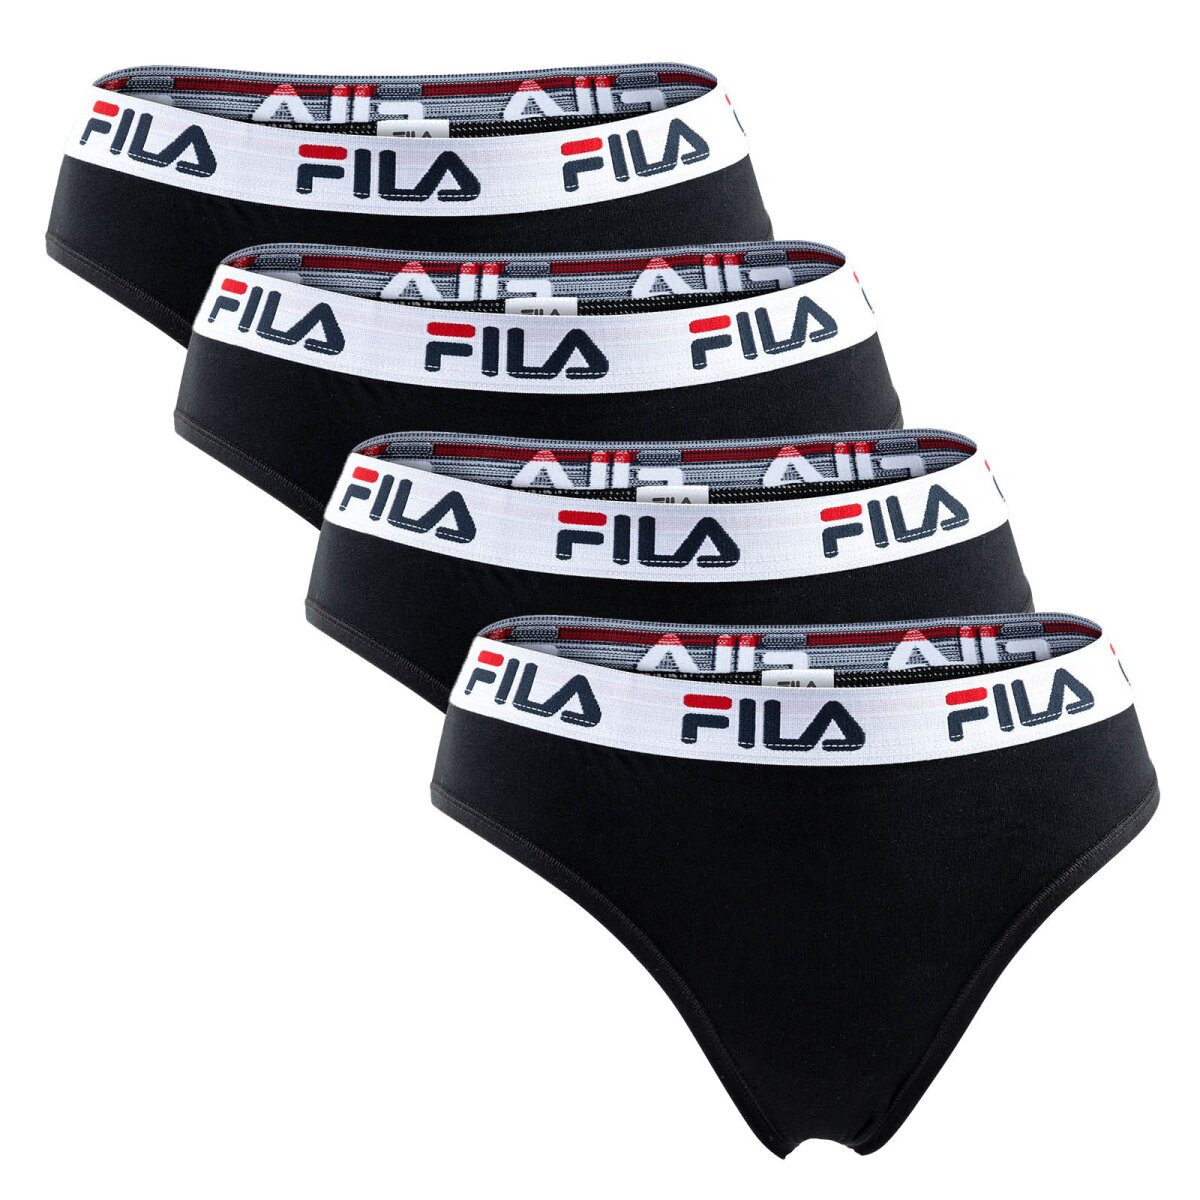 https://www.yourfashionplace.de/media/image/product/149612/lg/f6067-4_fila-ladies-brazilian-briefs-4-pack-logo-waistband-cotton-stretch-solid-colour.jpg